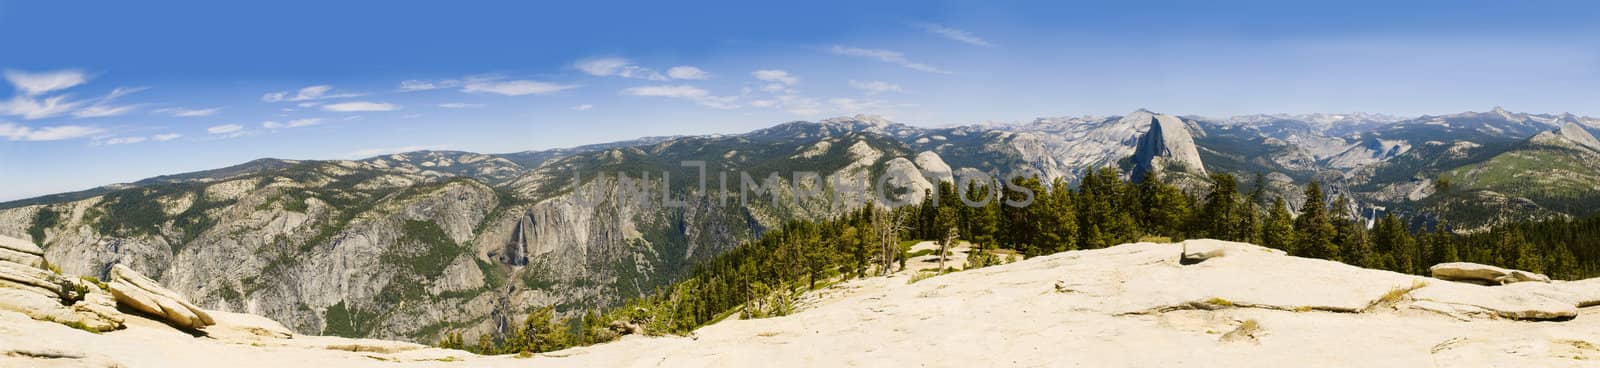 panorama of Yosemite by jeffbanke